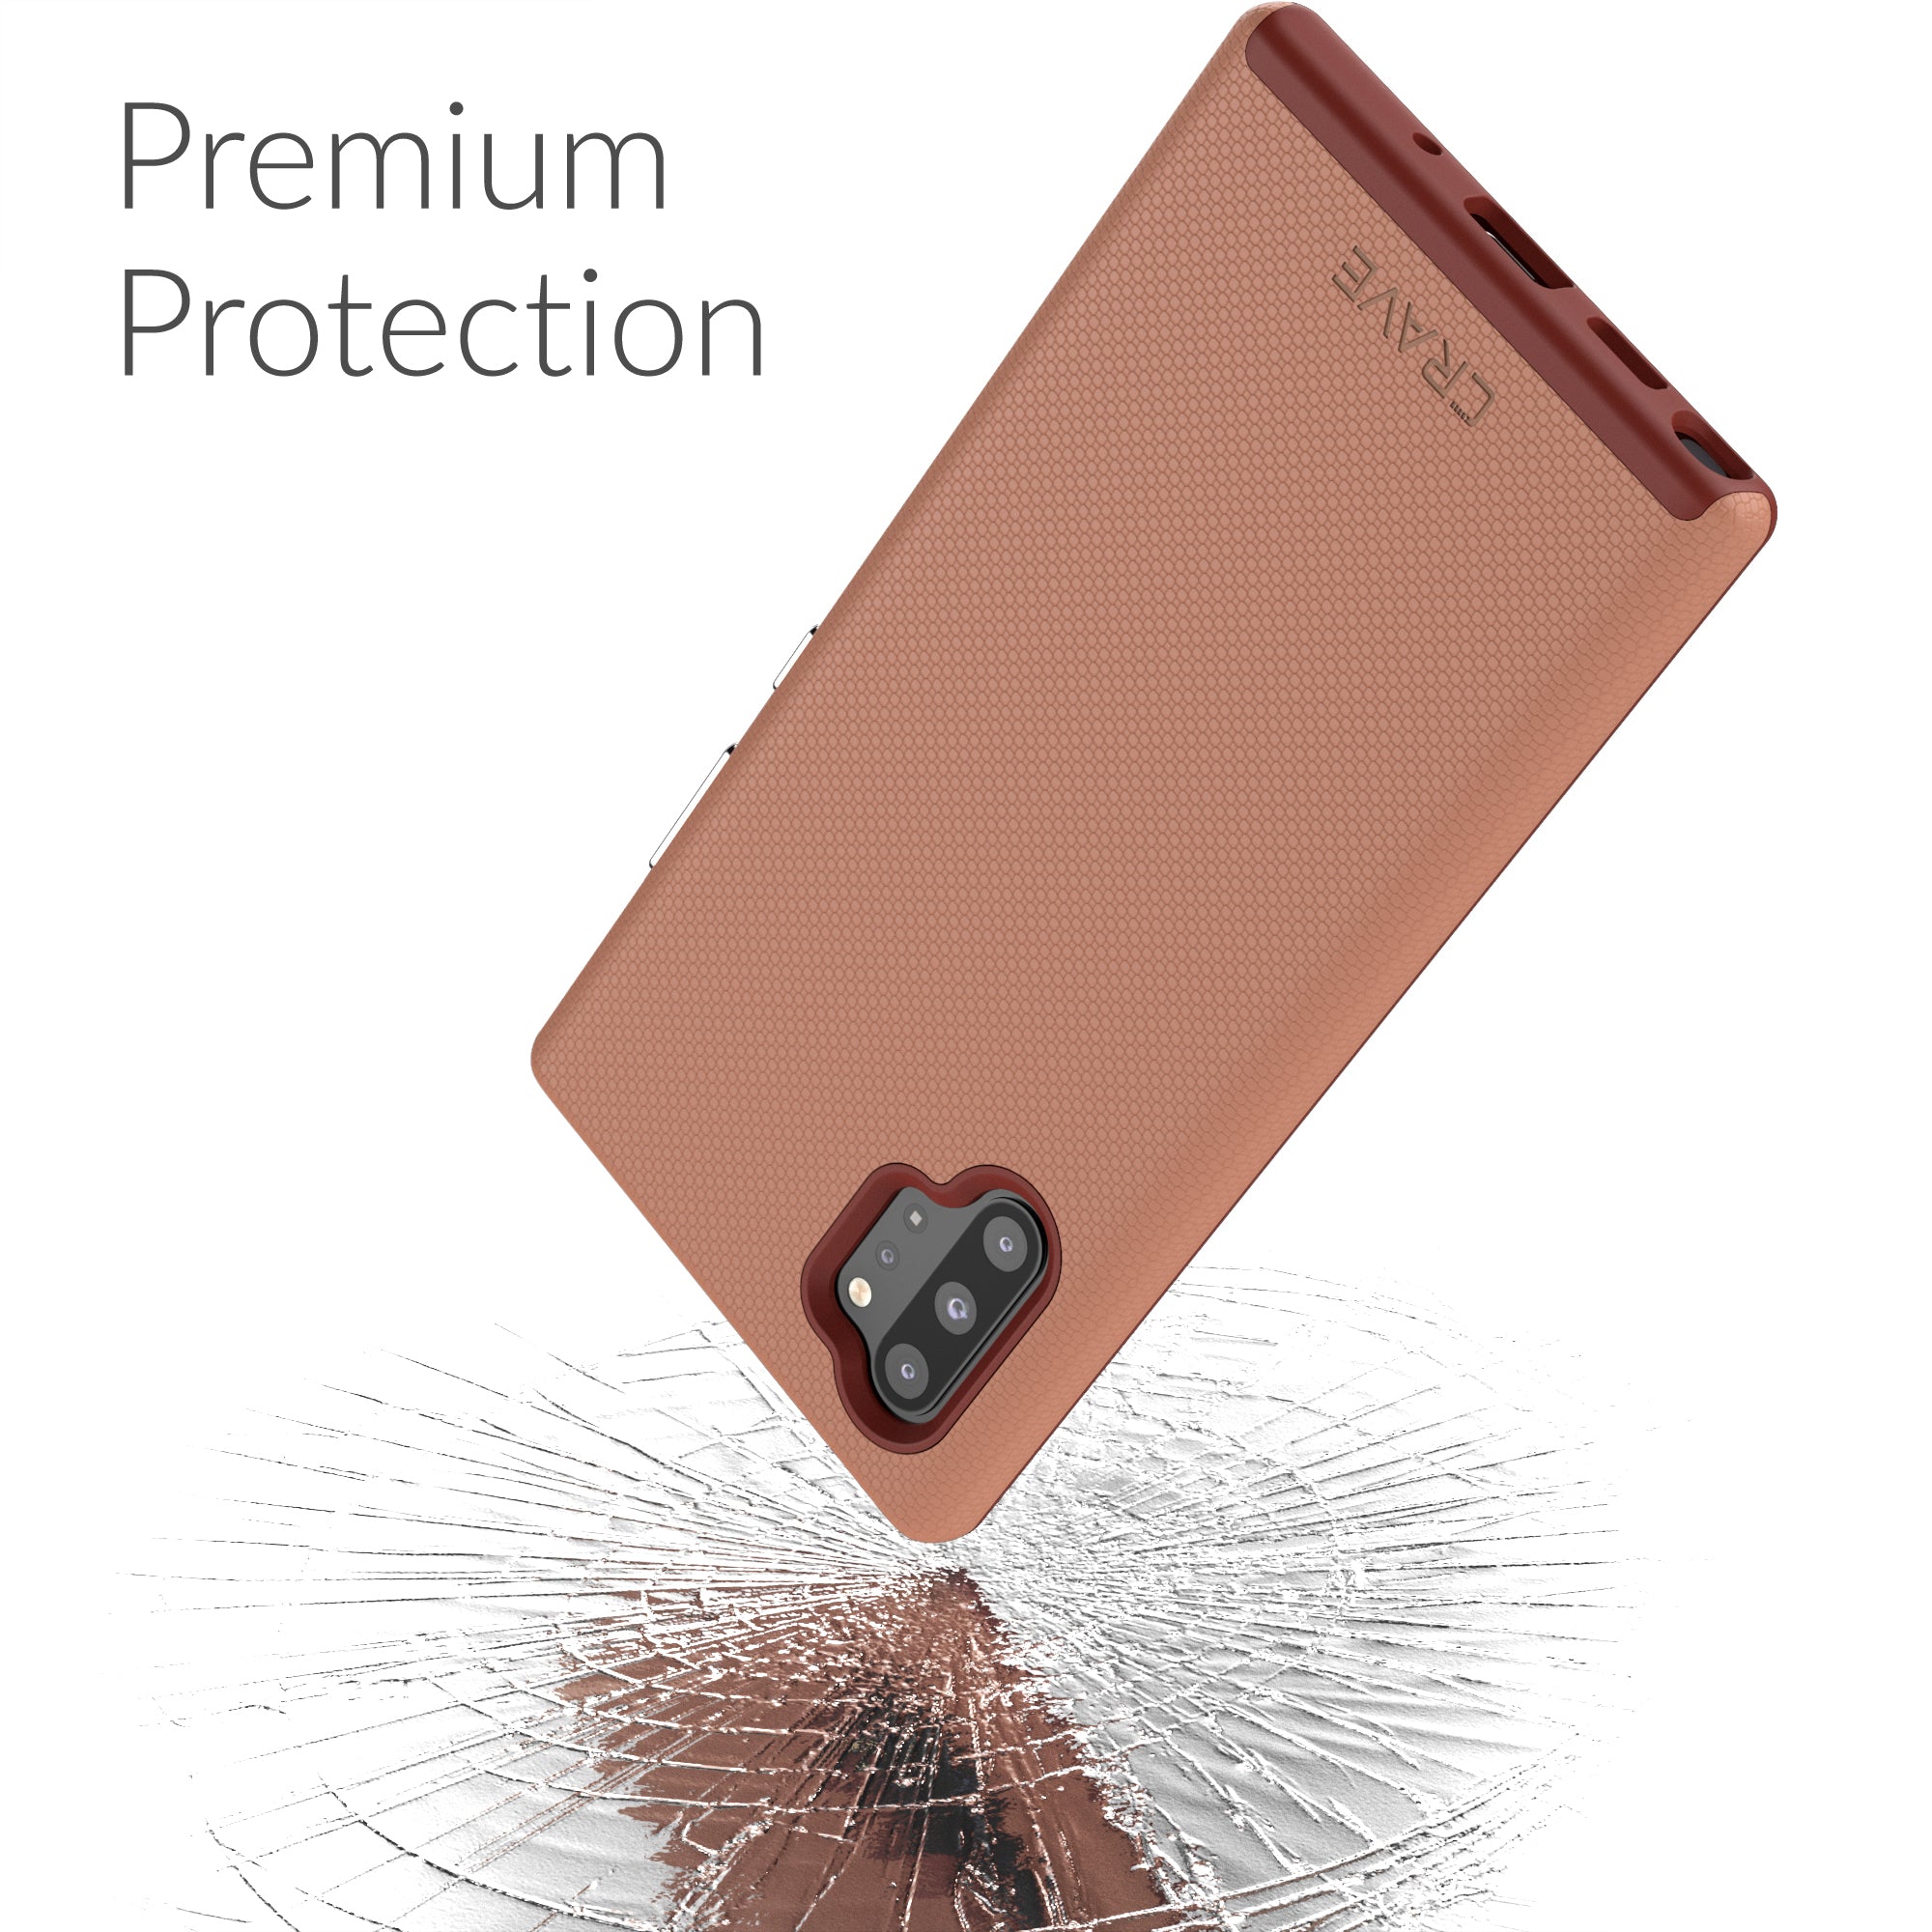 Galaxy Note 10 Plus Case Dual Guard